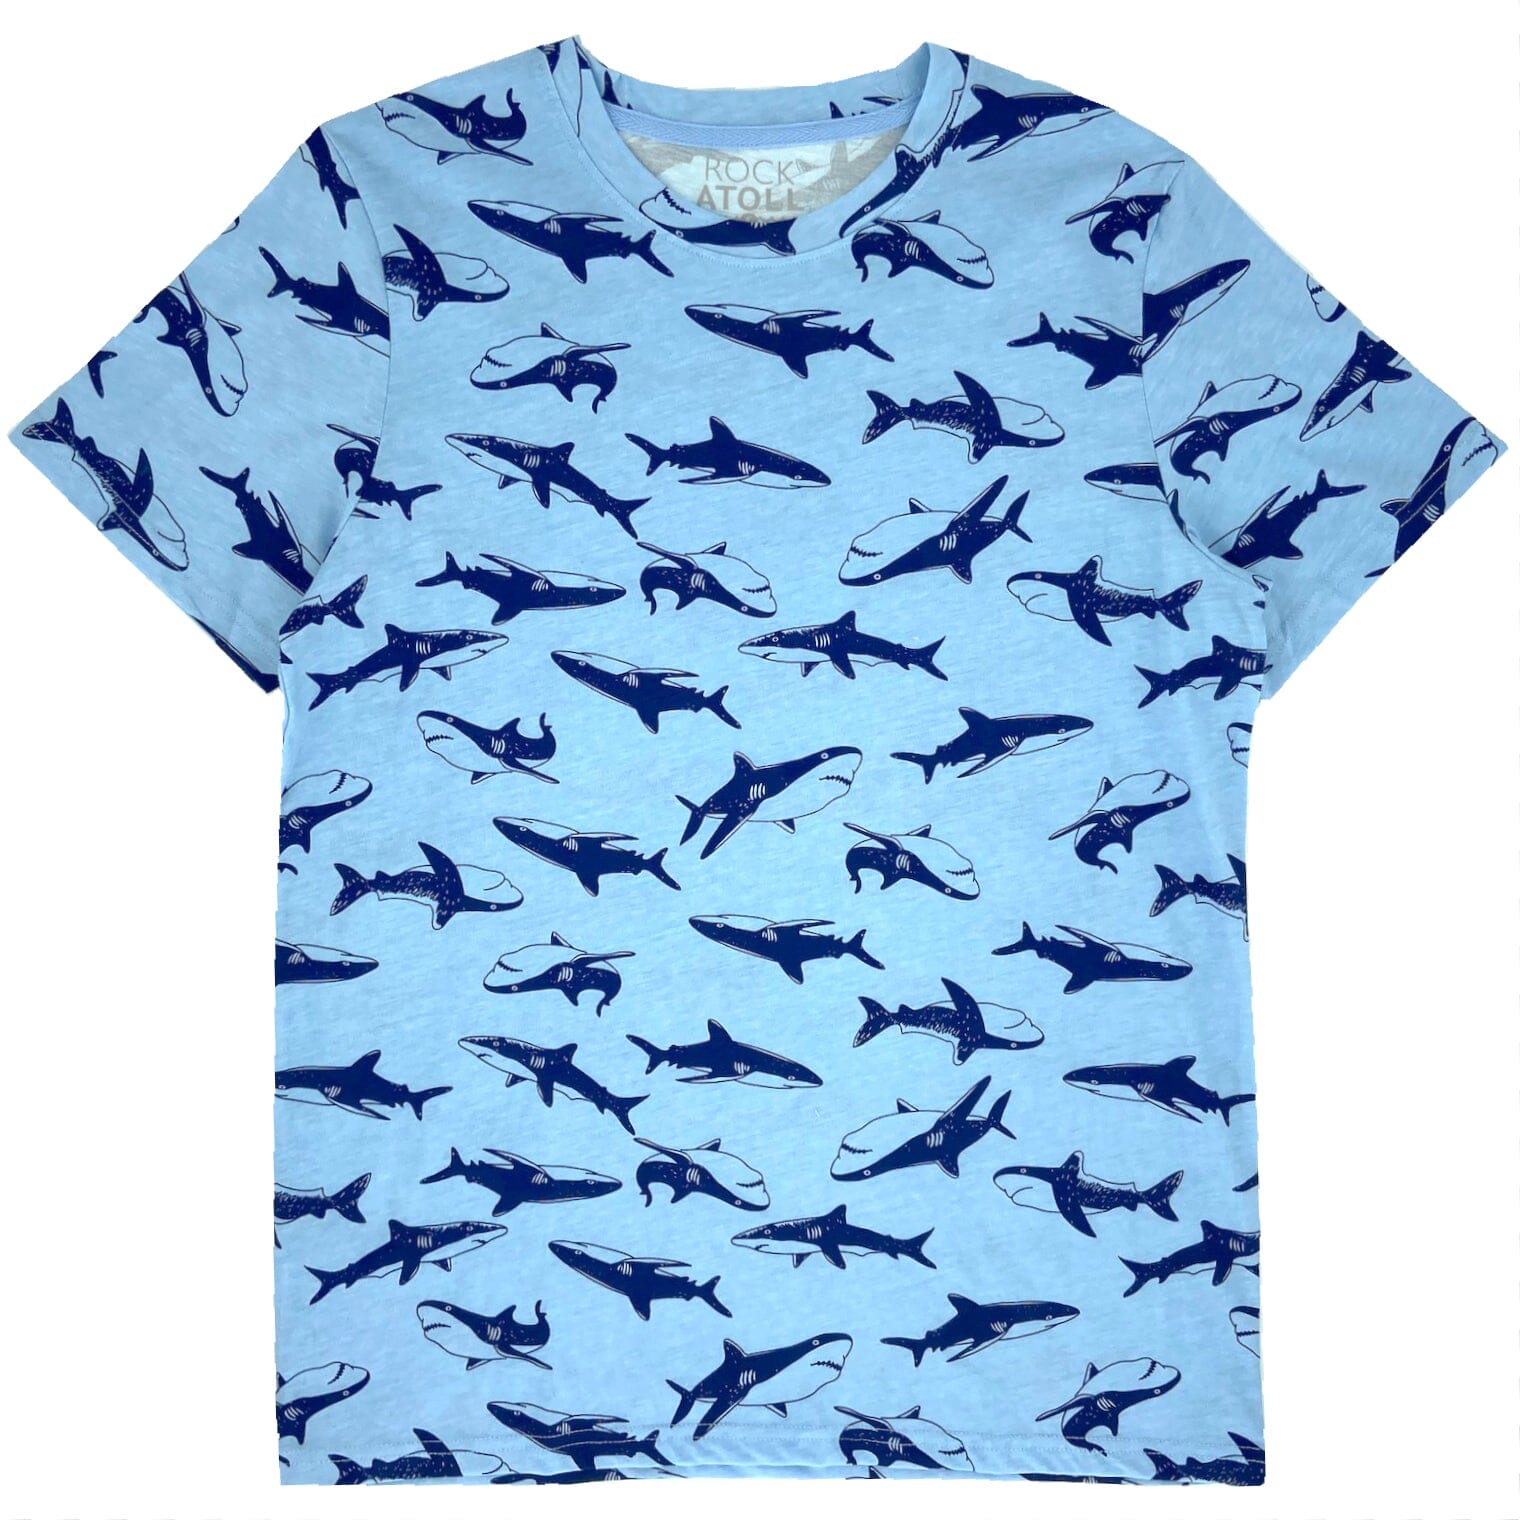 Men's Super Soft Blue Great White Shark Novelty Print Cotton T-Shirt Crew Neck